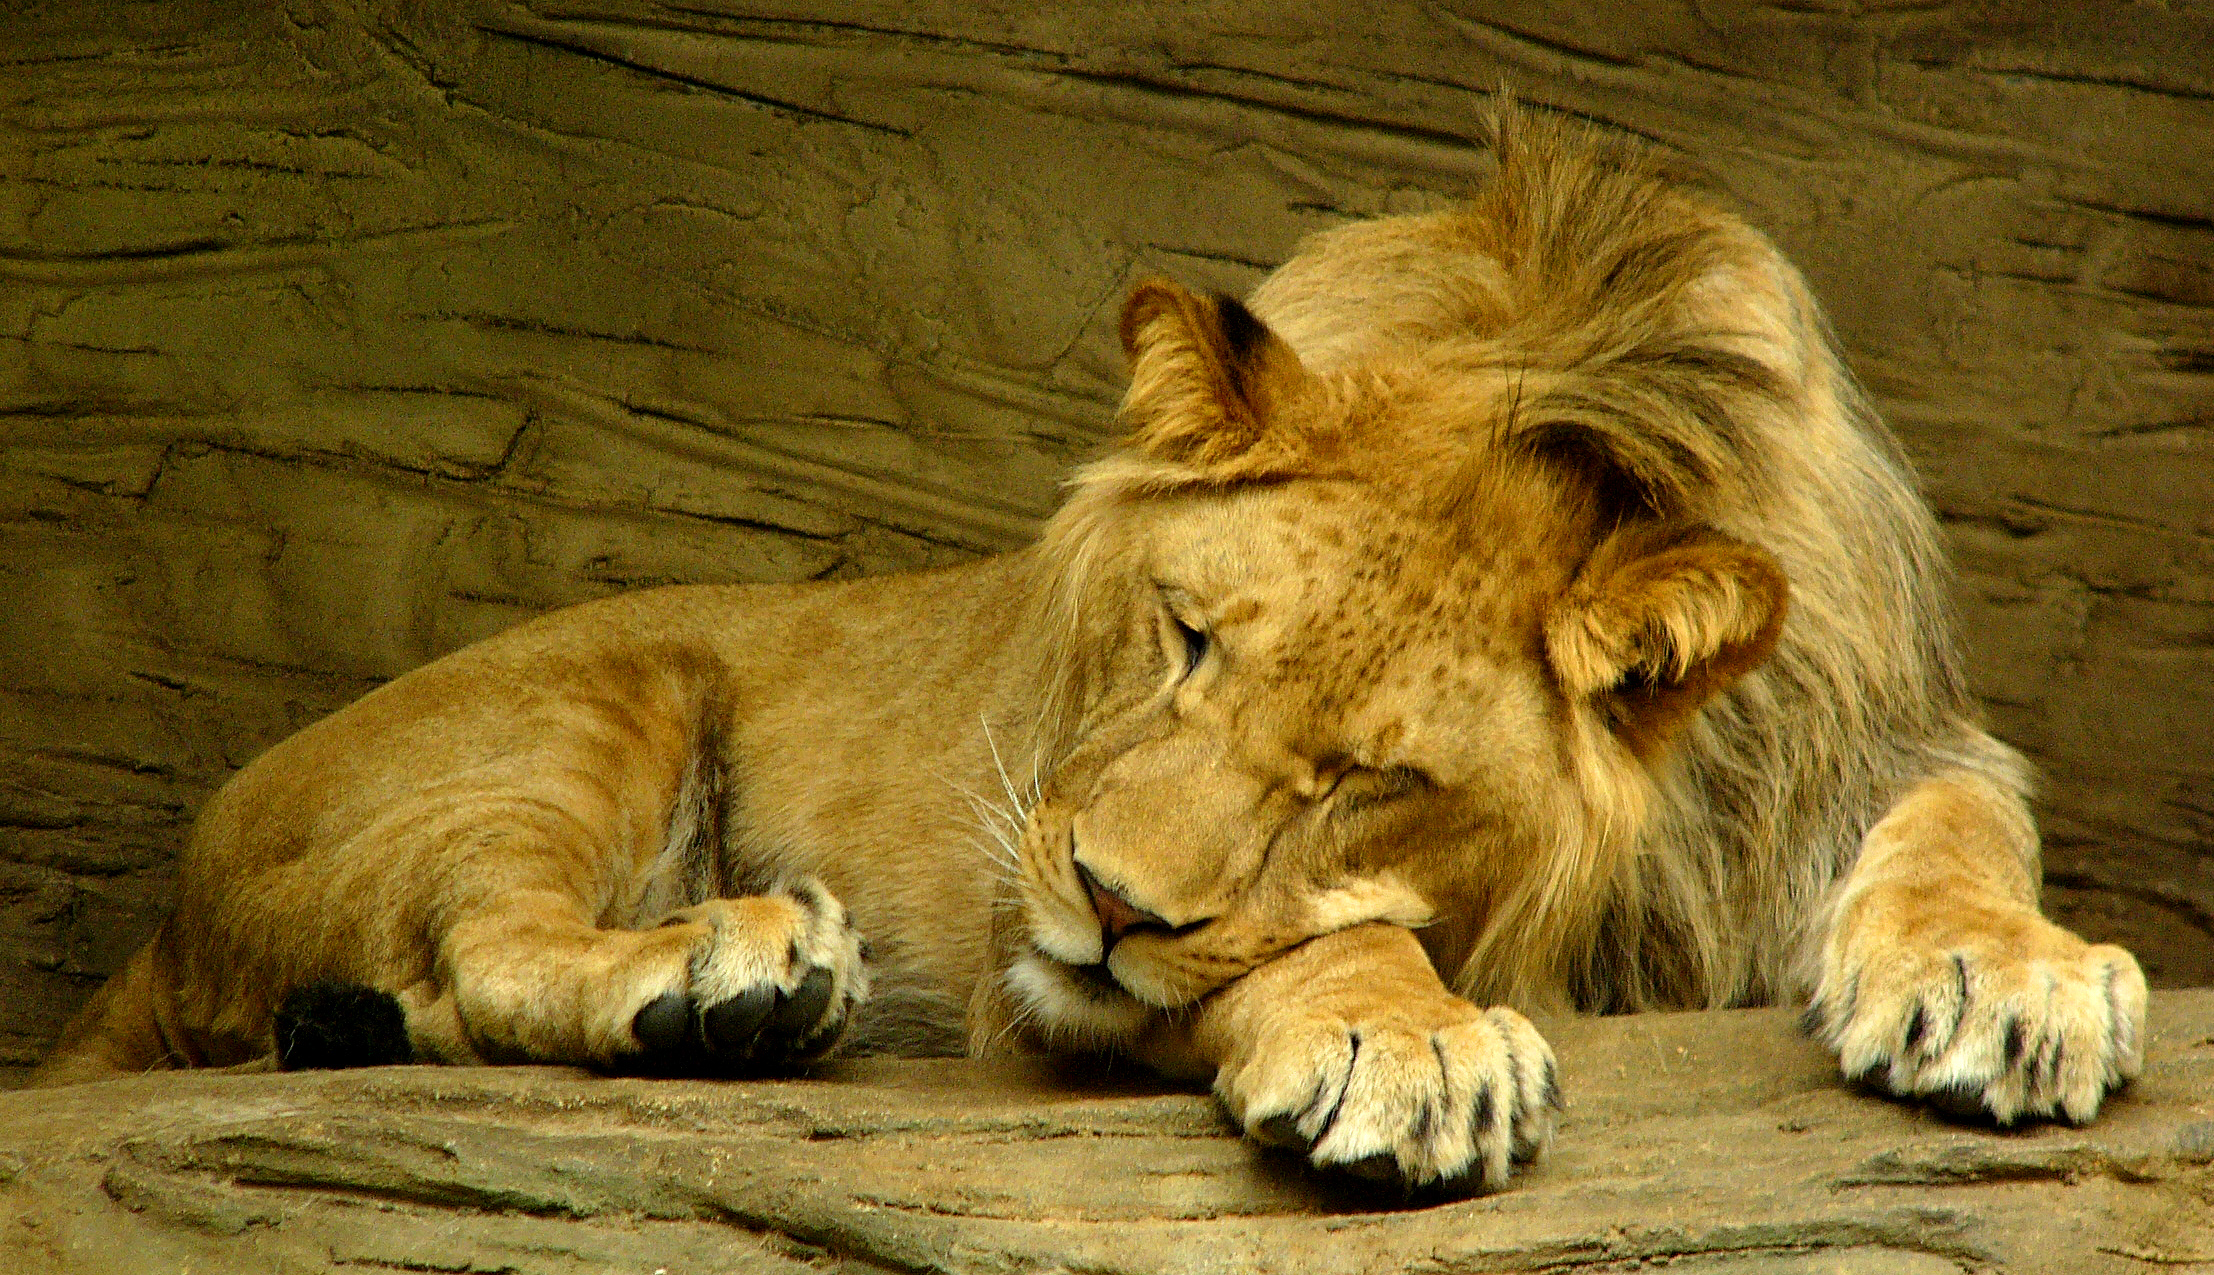 File:Sleeping lion.jpg - Wikimedia Commons